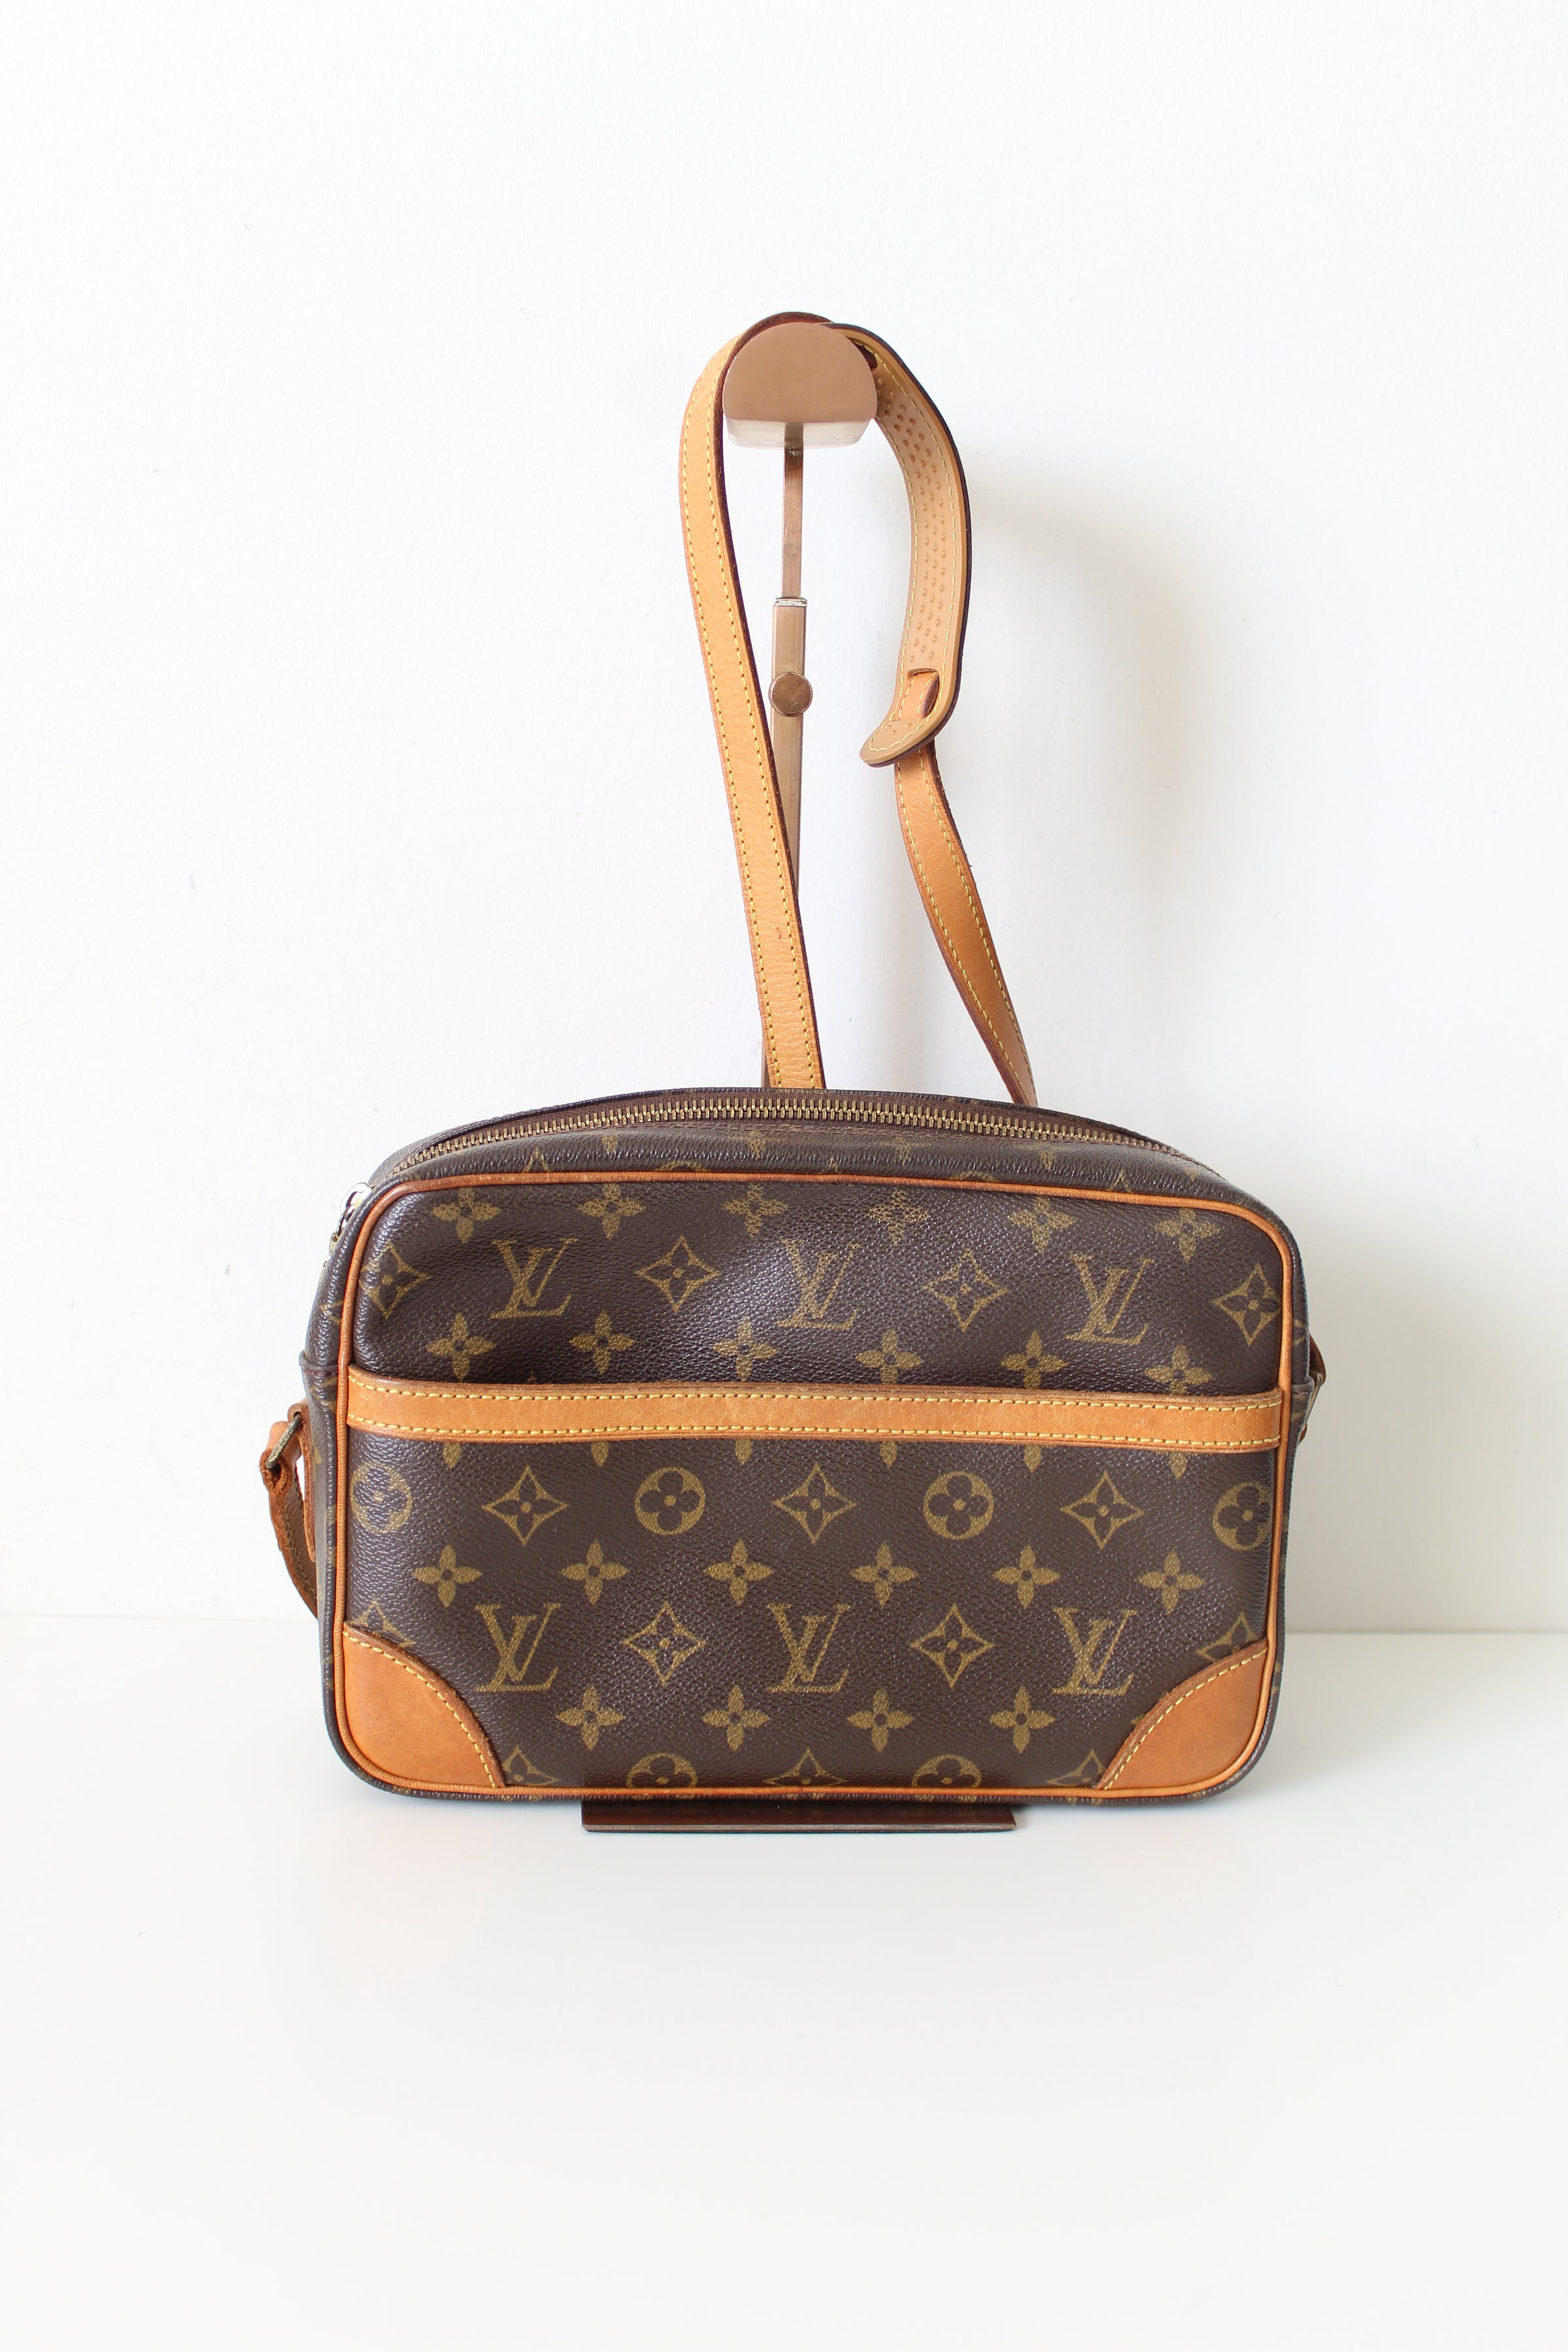 Sold at Auction: Louis Vuitton Monogram Trocadero 27 Bag